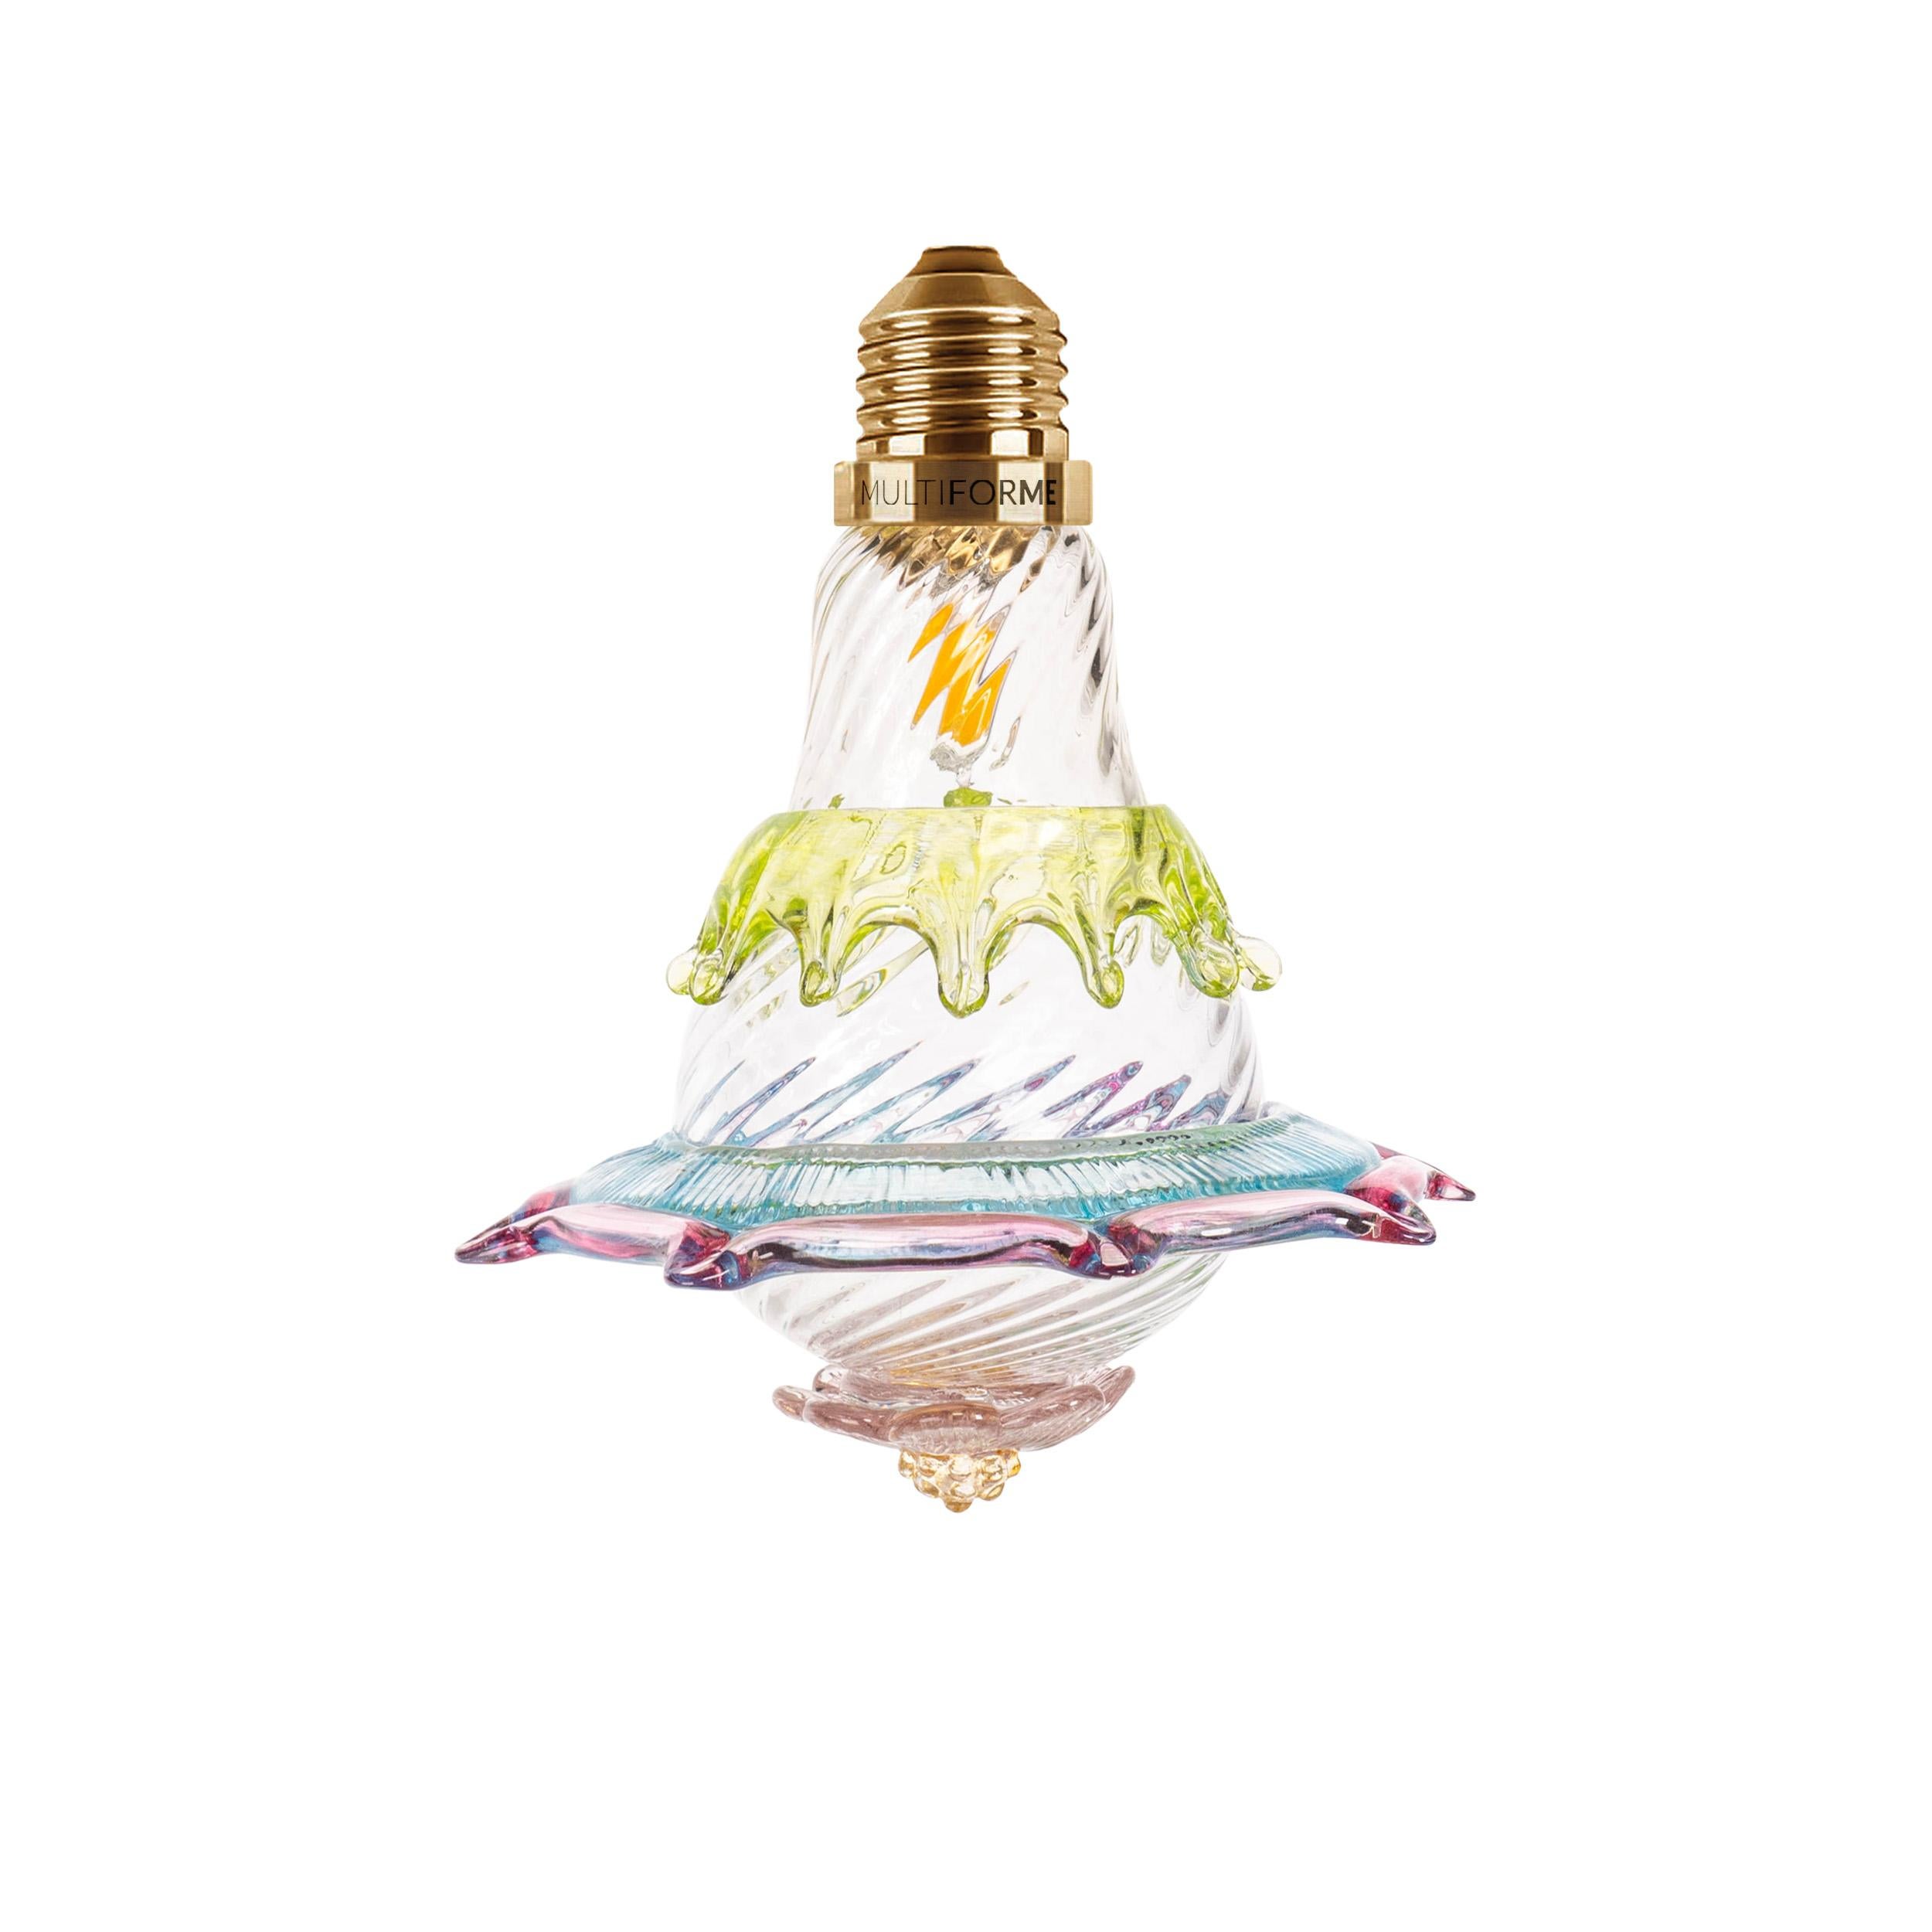 Artistic glass lightbulb chandelier Murano Bulb Marcantonio X Multiforme #05 For Sale 4